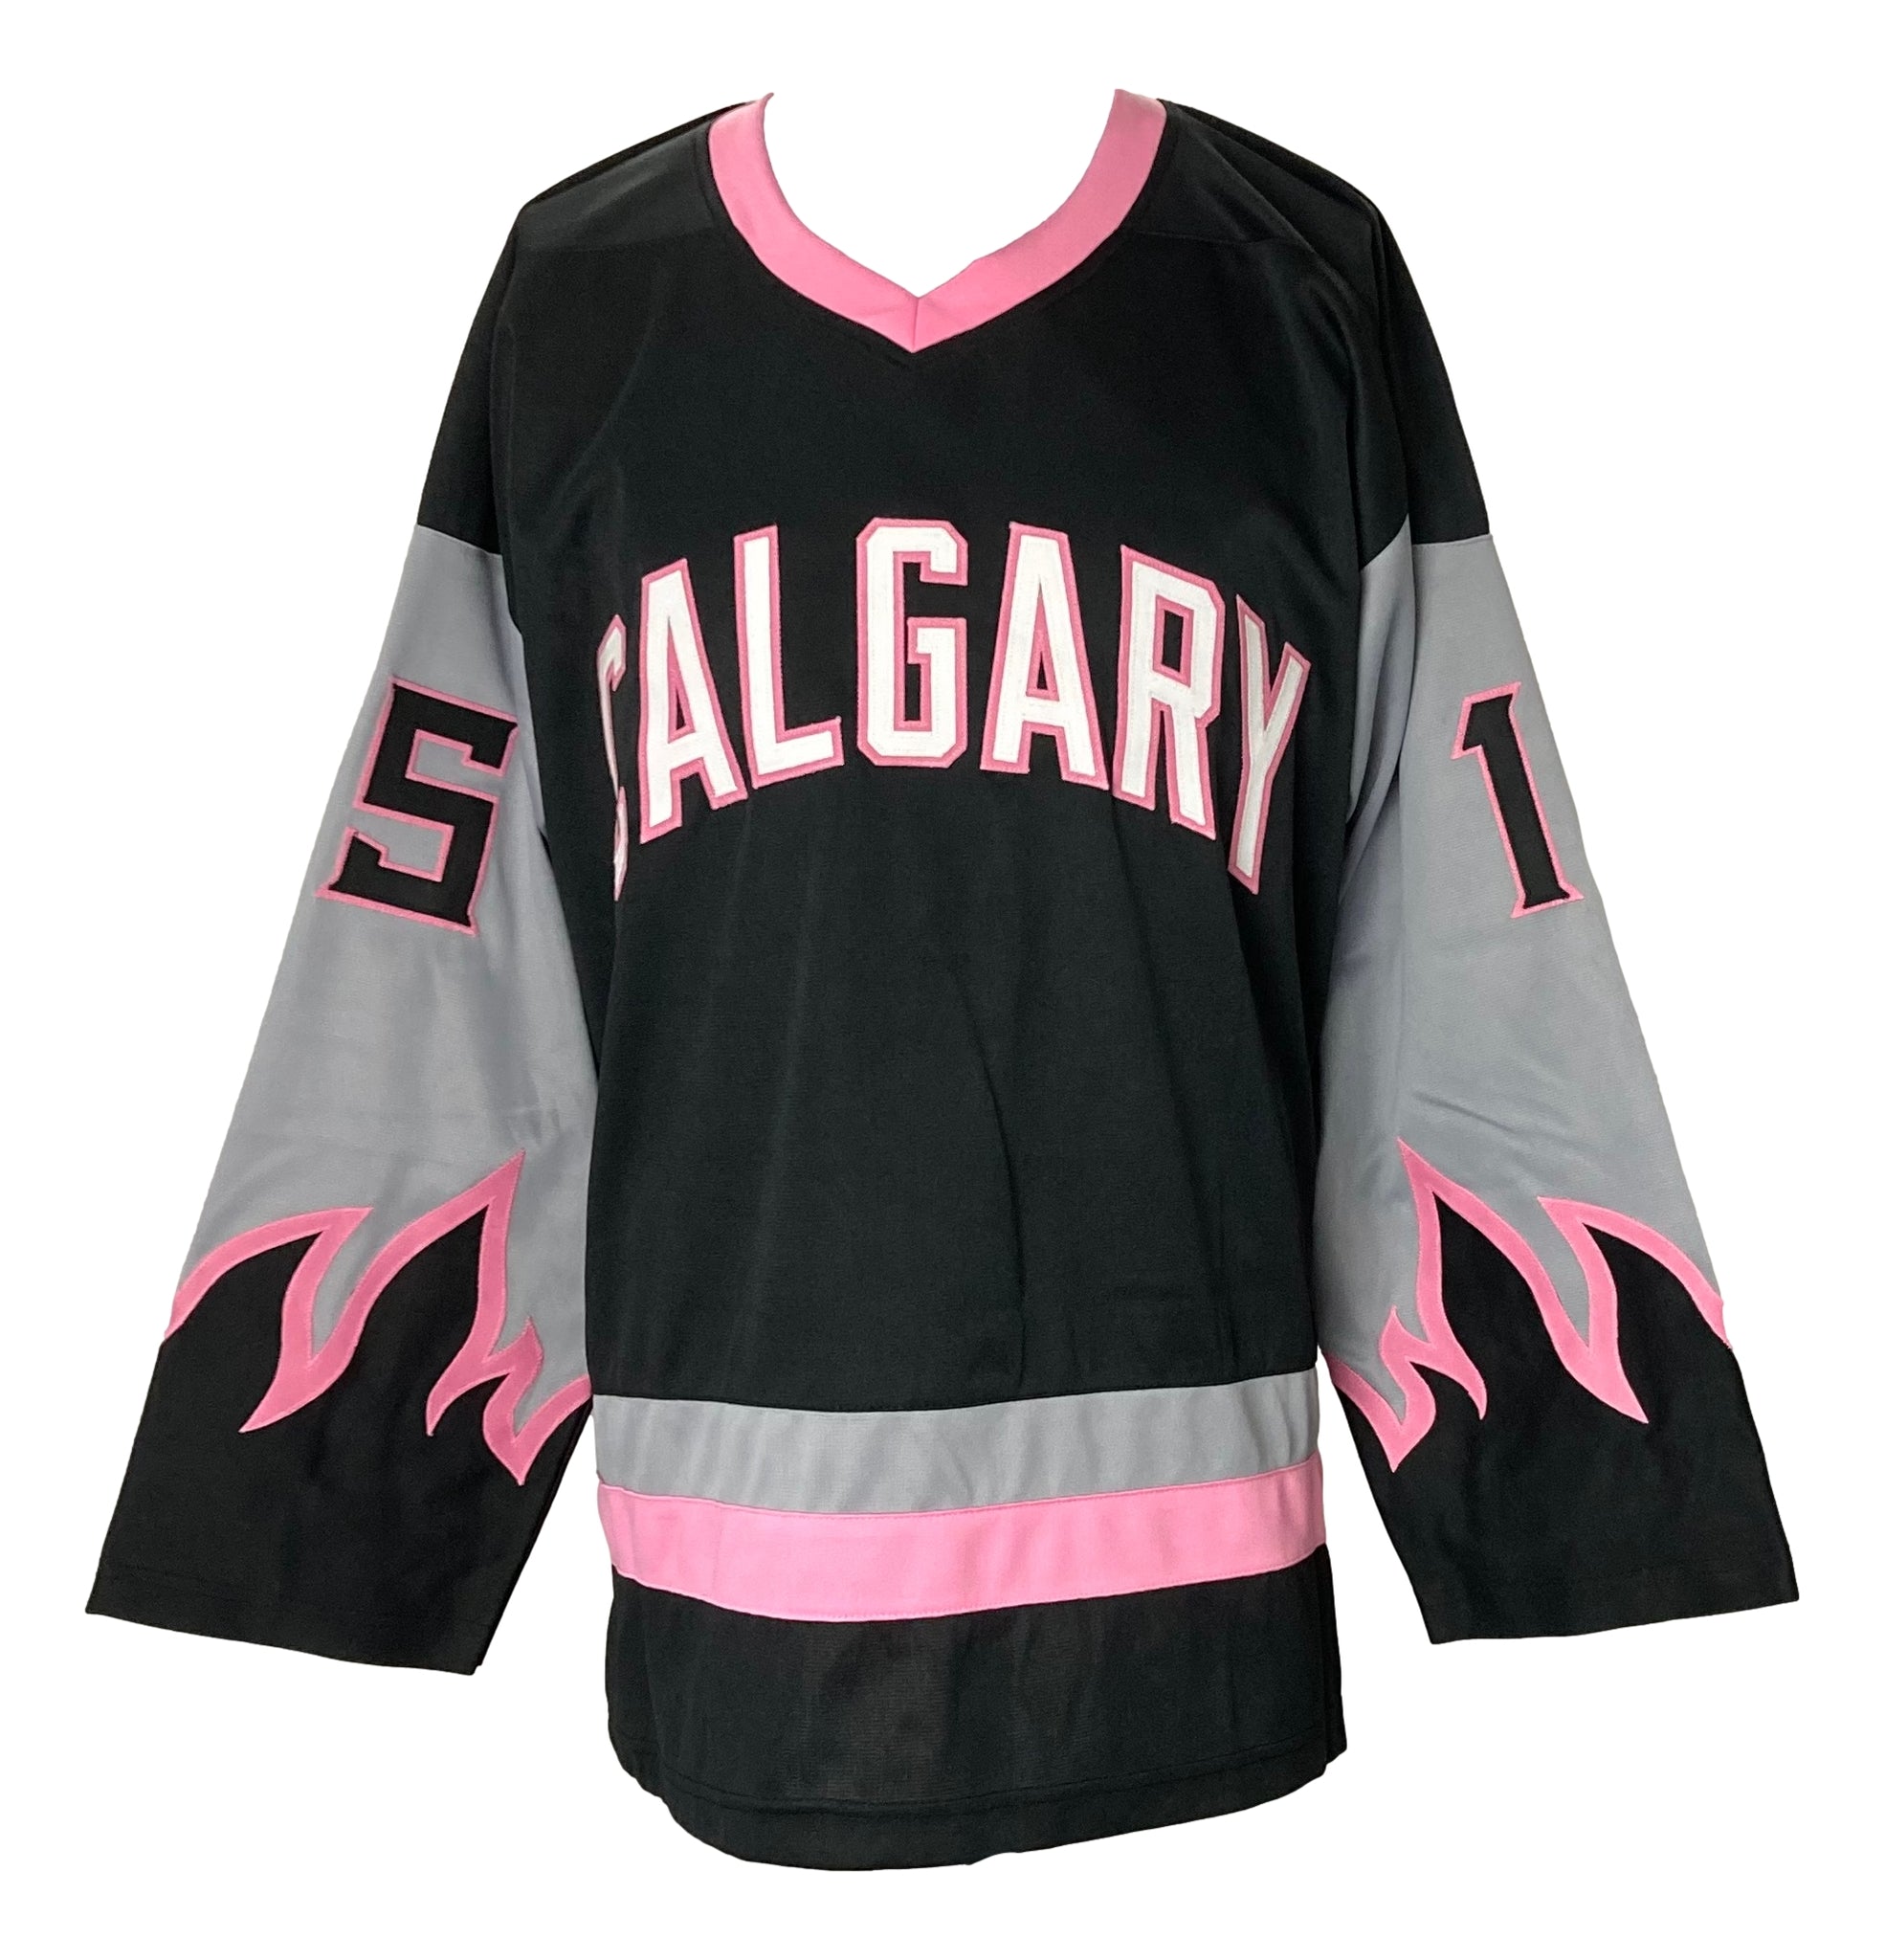 Calgary Hitmen release special pink Bret Hitman Hart jersey (PHOTOS)